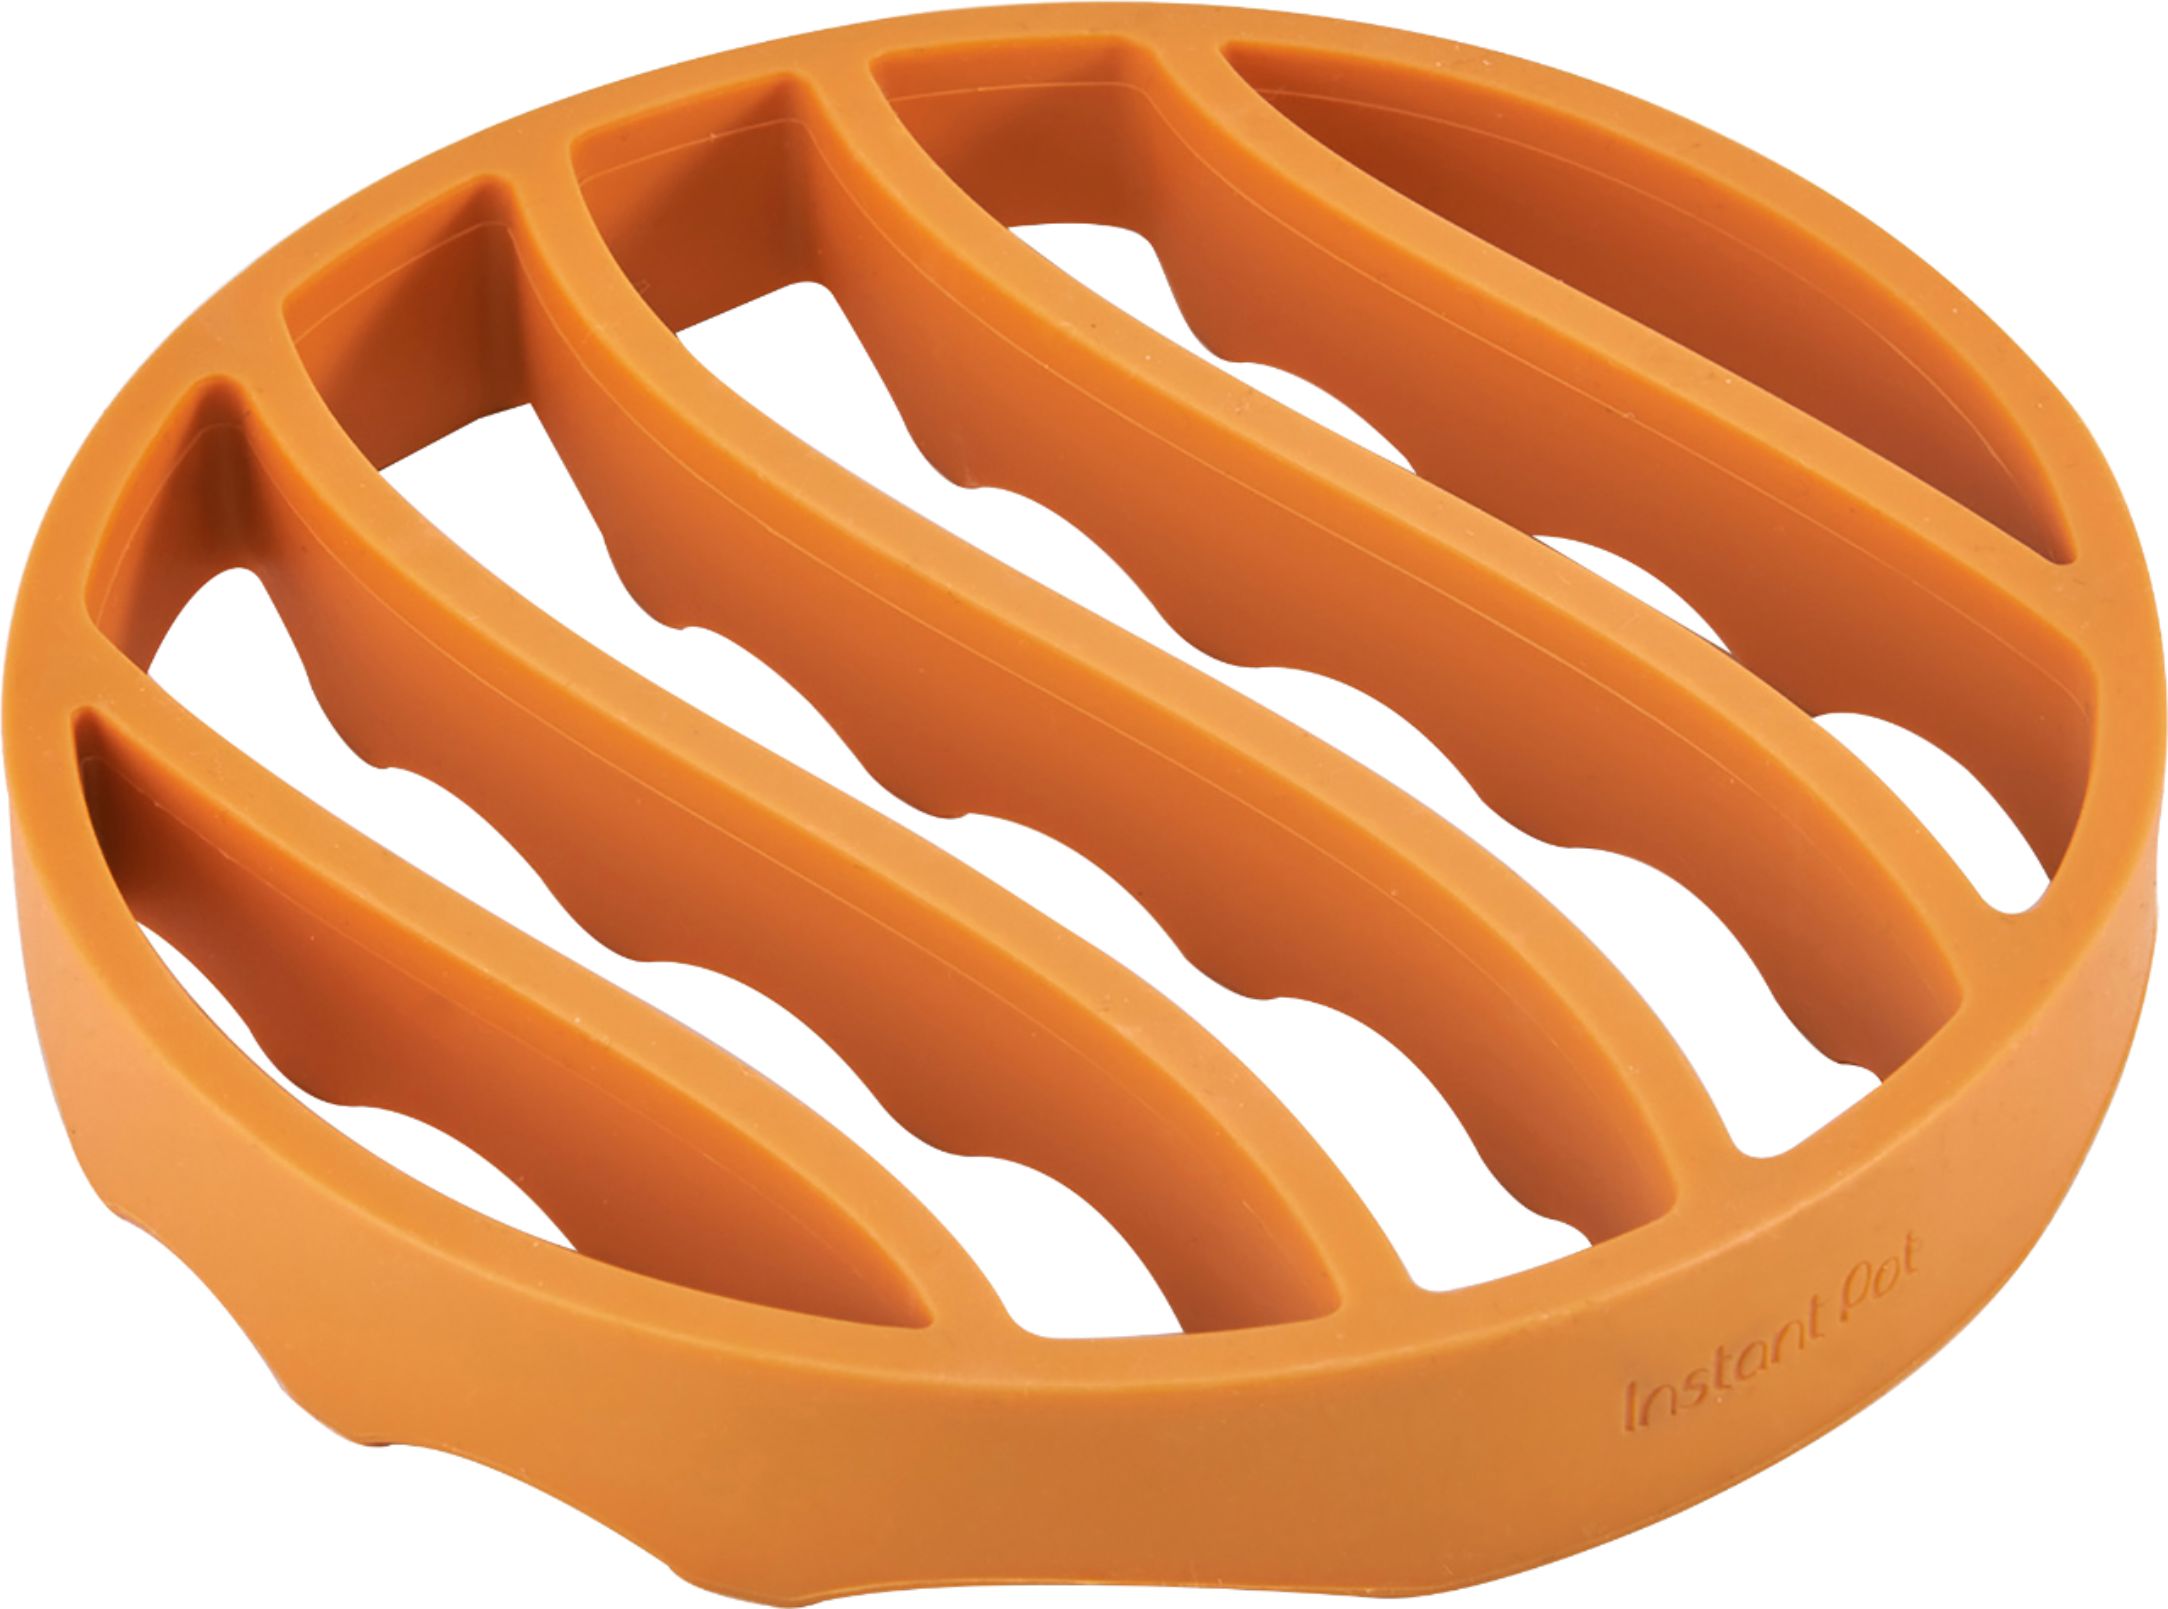 Instant Pot Silicone Roasting Rack Orange 5252241 - Best Buy